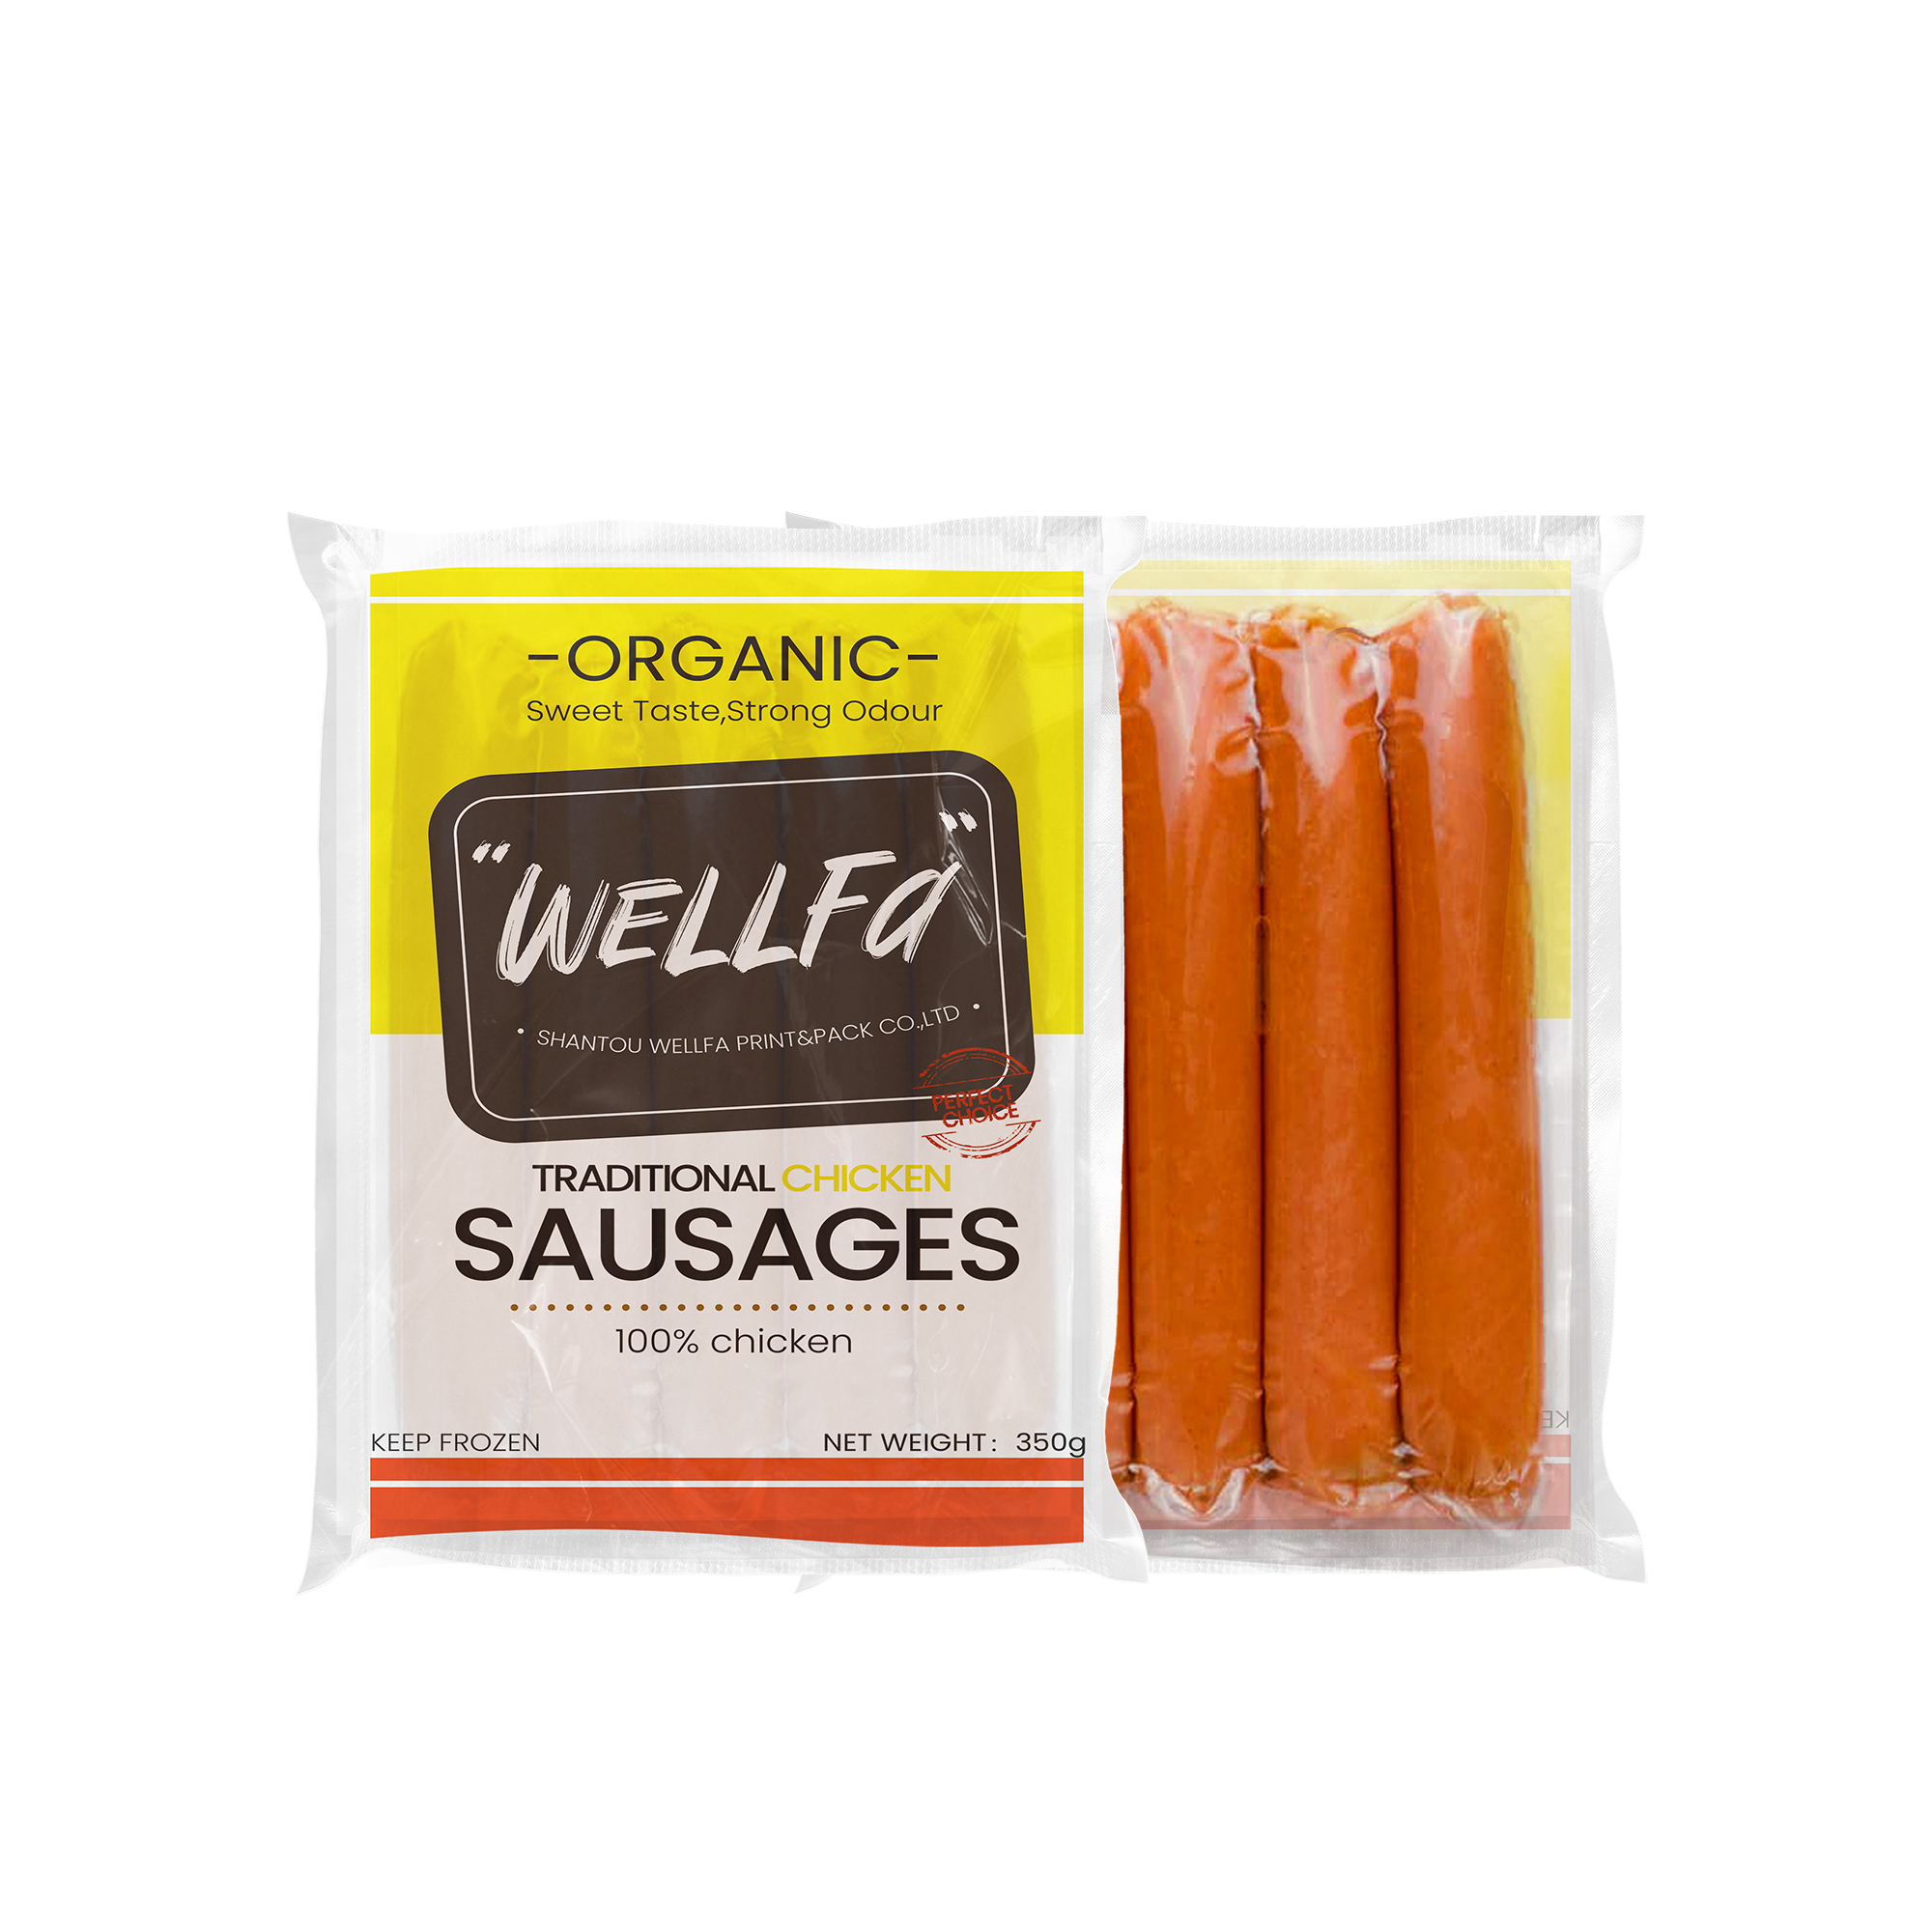 Frozen Sausage Packaging